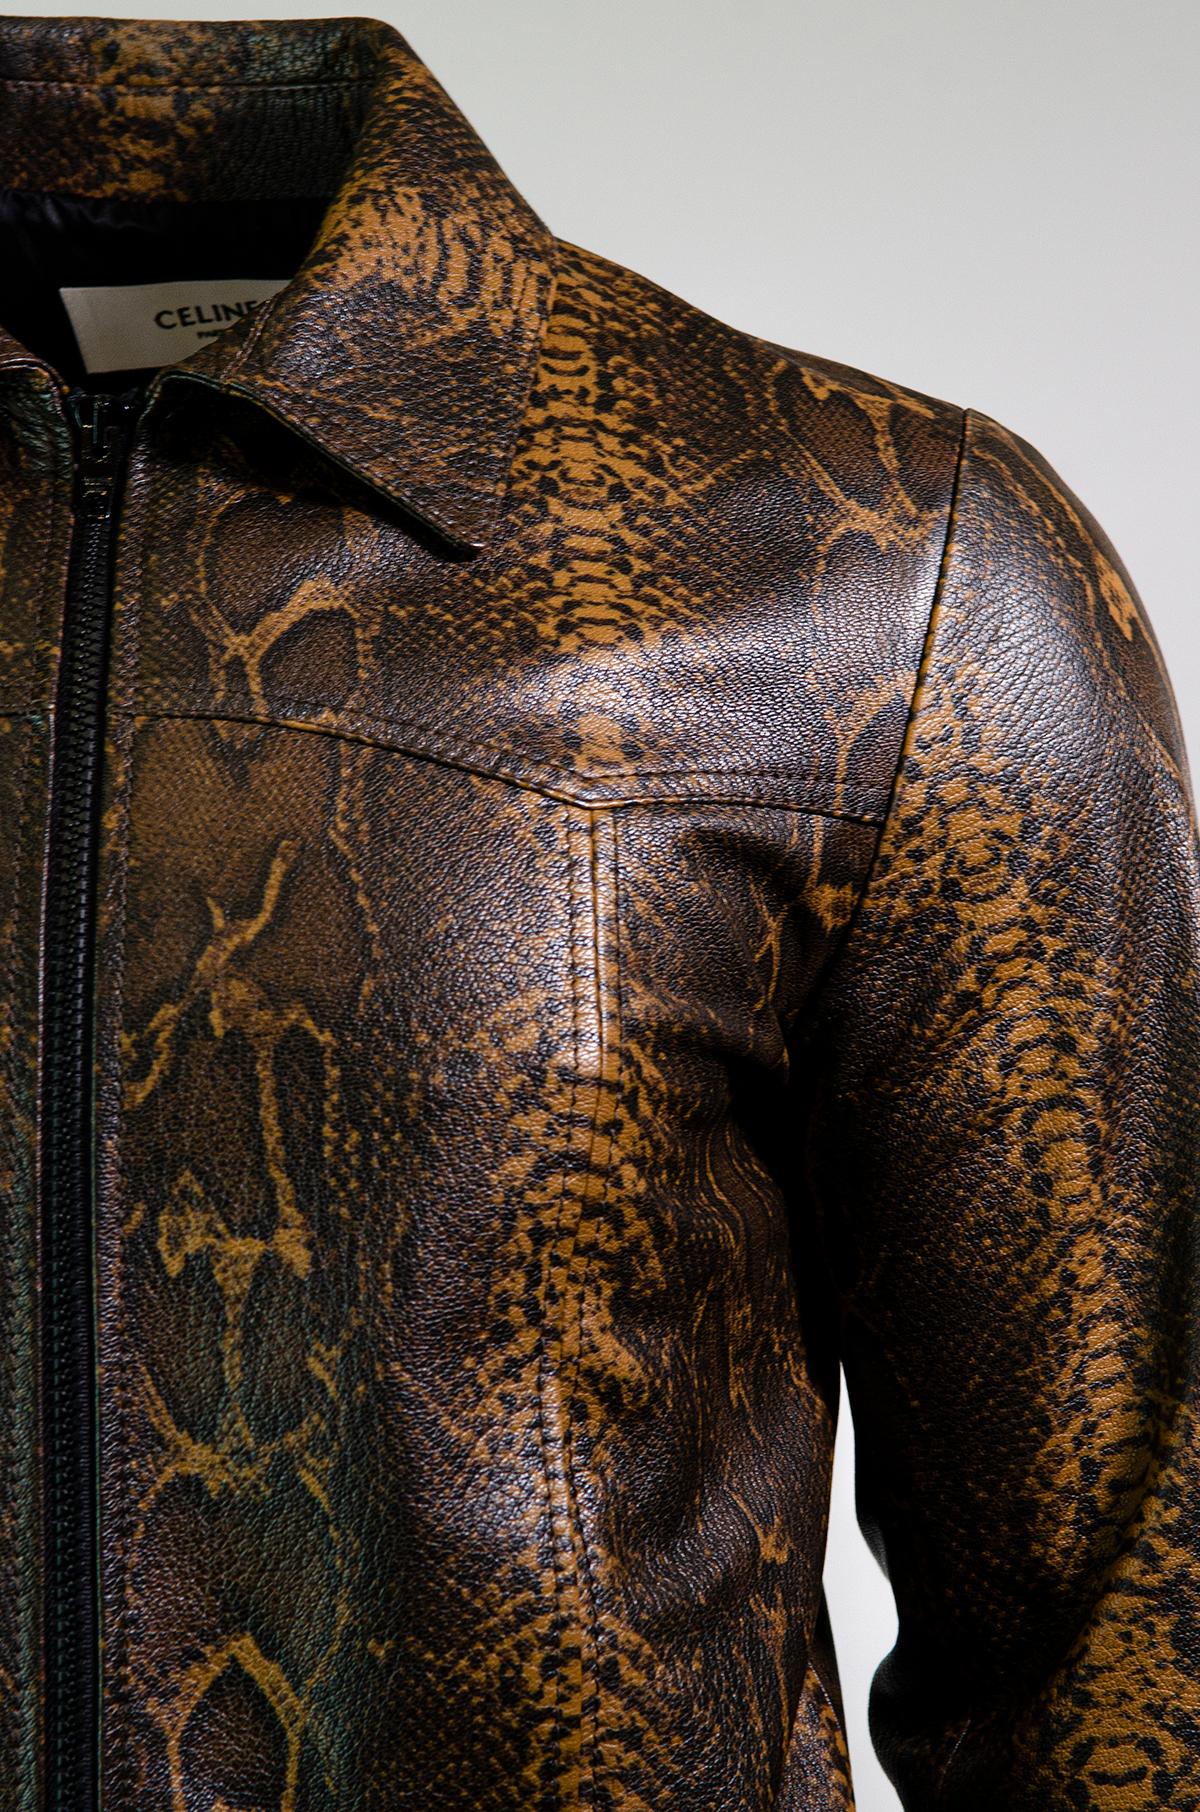 CELINE BY HEDI SLIMANE F/W2019 Rare Runway Snakeskin Print Leather ...